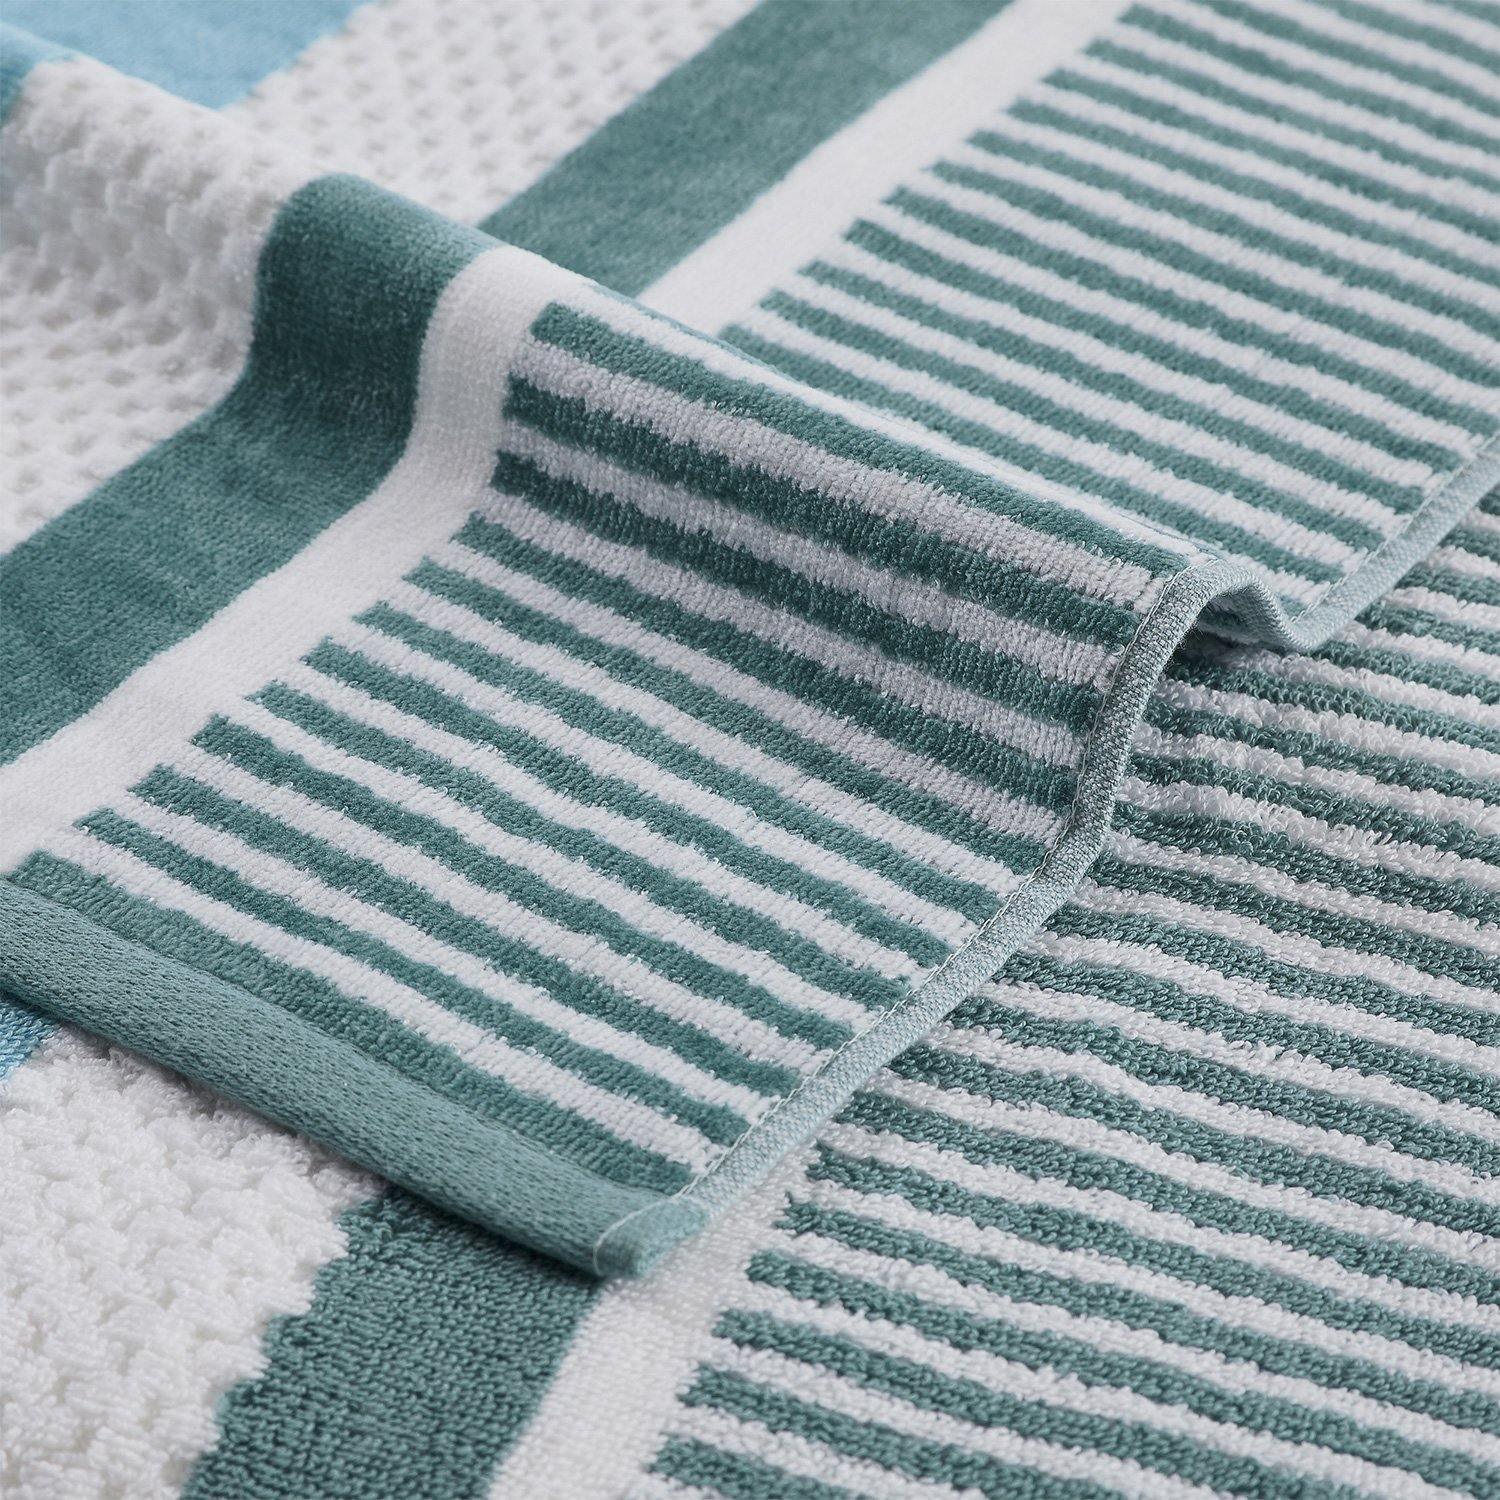 Checkered Stripes 100% Cotton Oversized Beach Towel FredCo